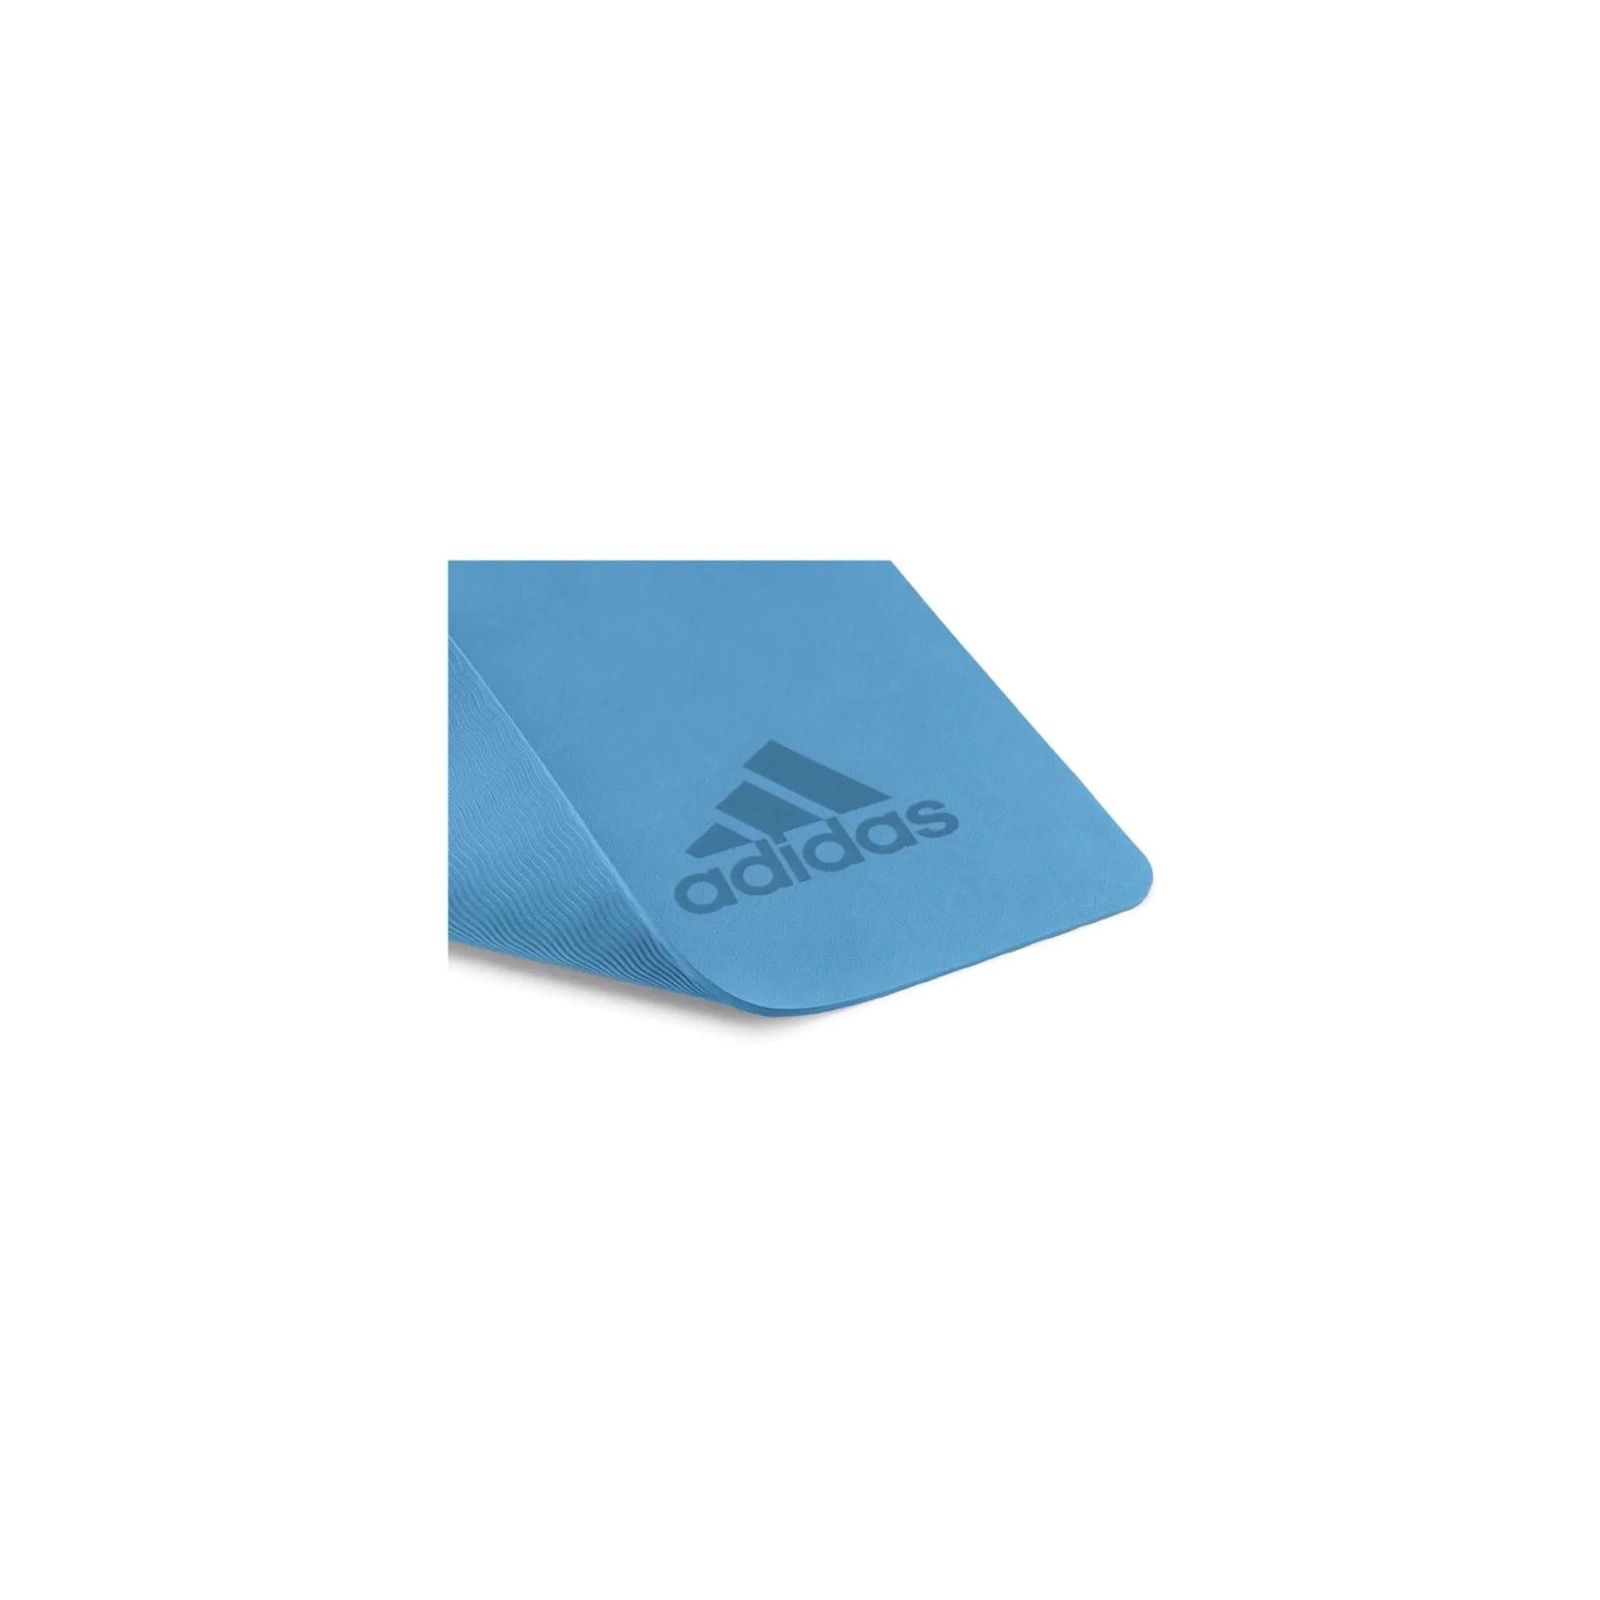 Коврик для йоги Adidas Premium Yoga Mat Уні 176 х 61 х 0,5 см Бежевий (ADYG-10300PT) изображение 2